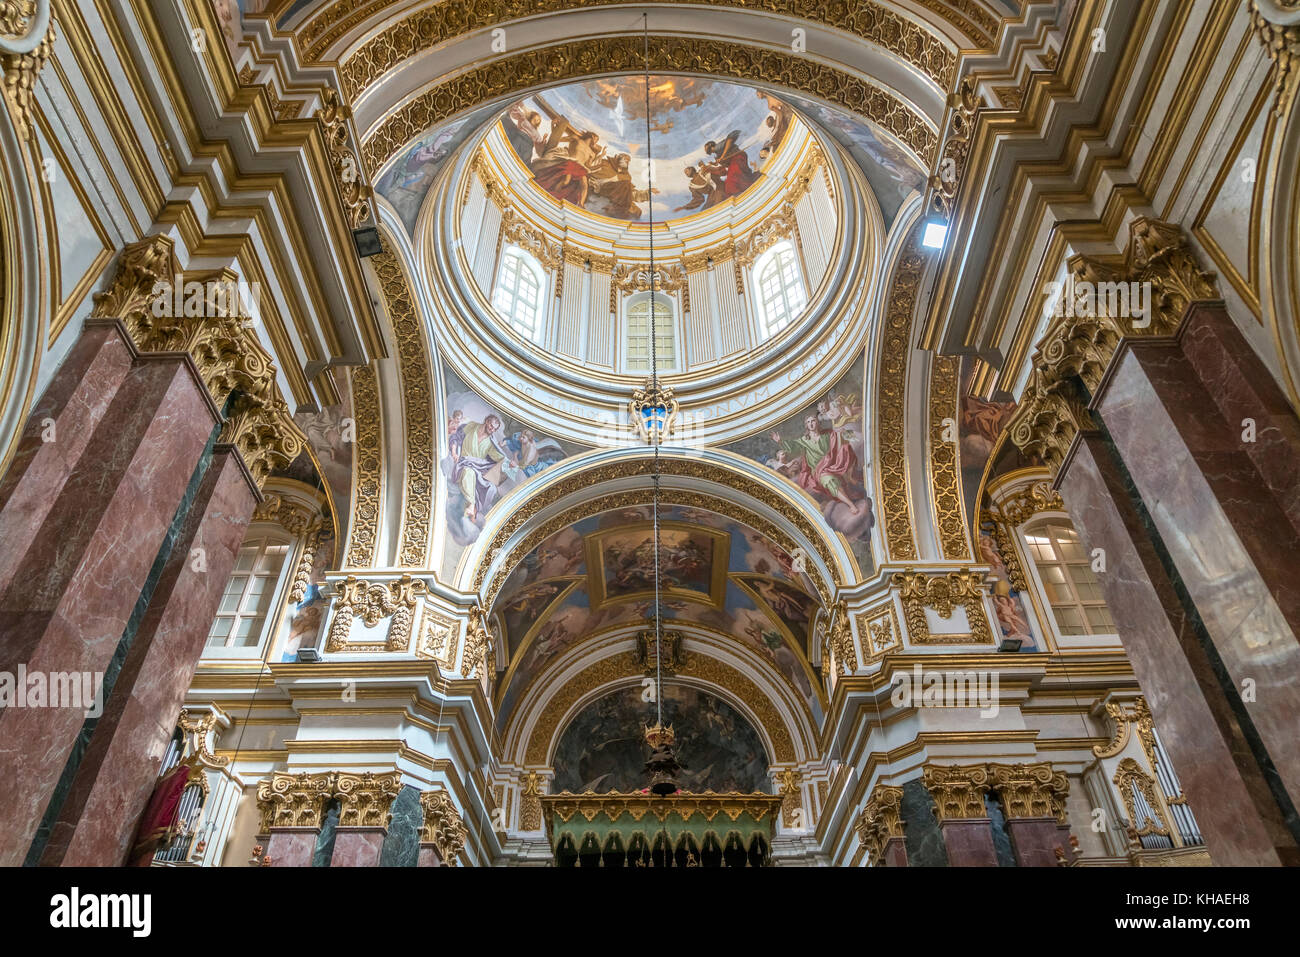 Dome Interieur Der St Paul Kathedrale Mdina Malta